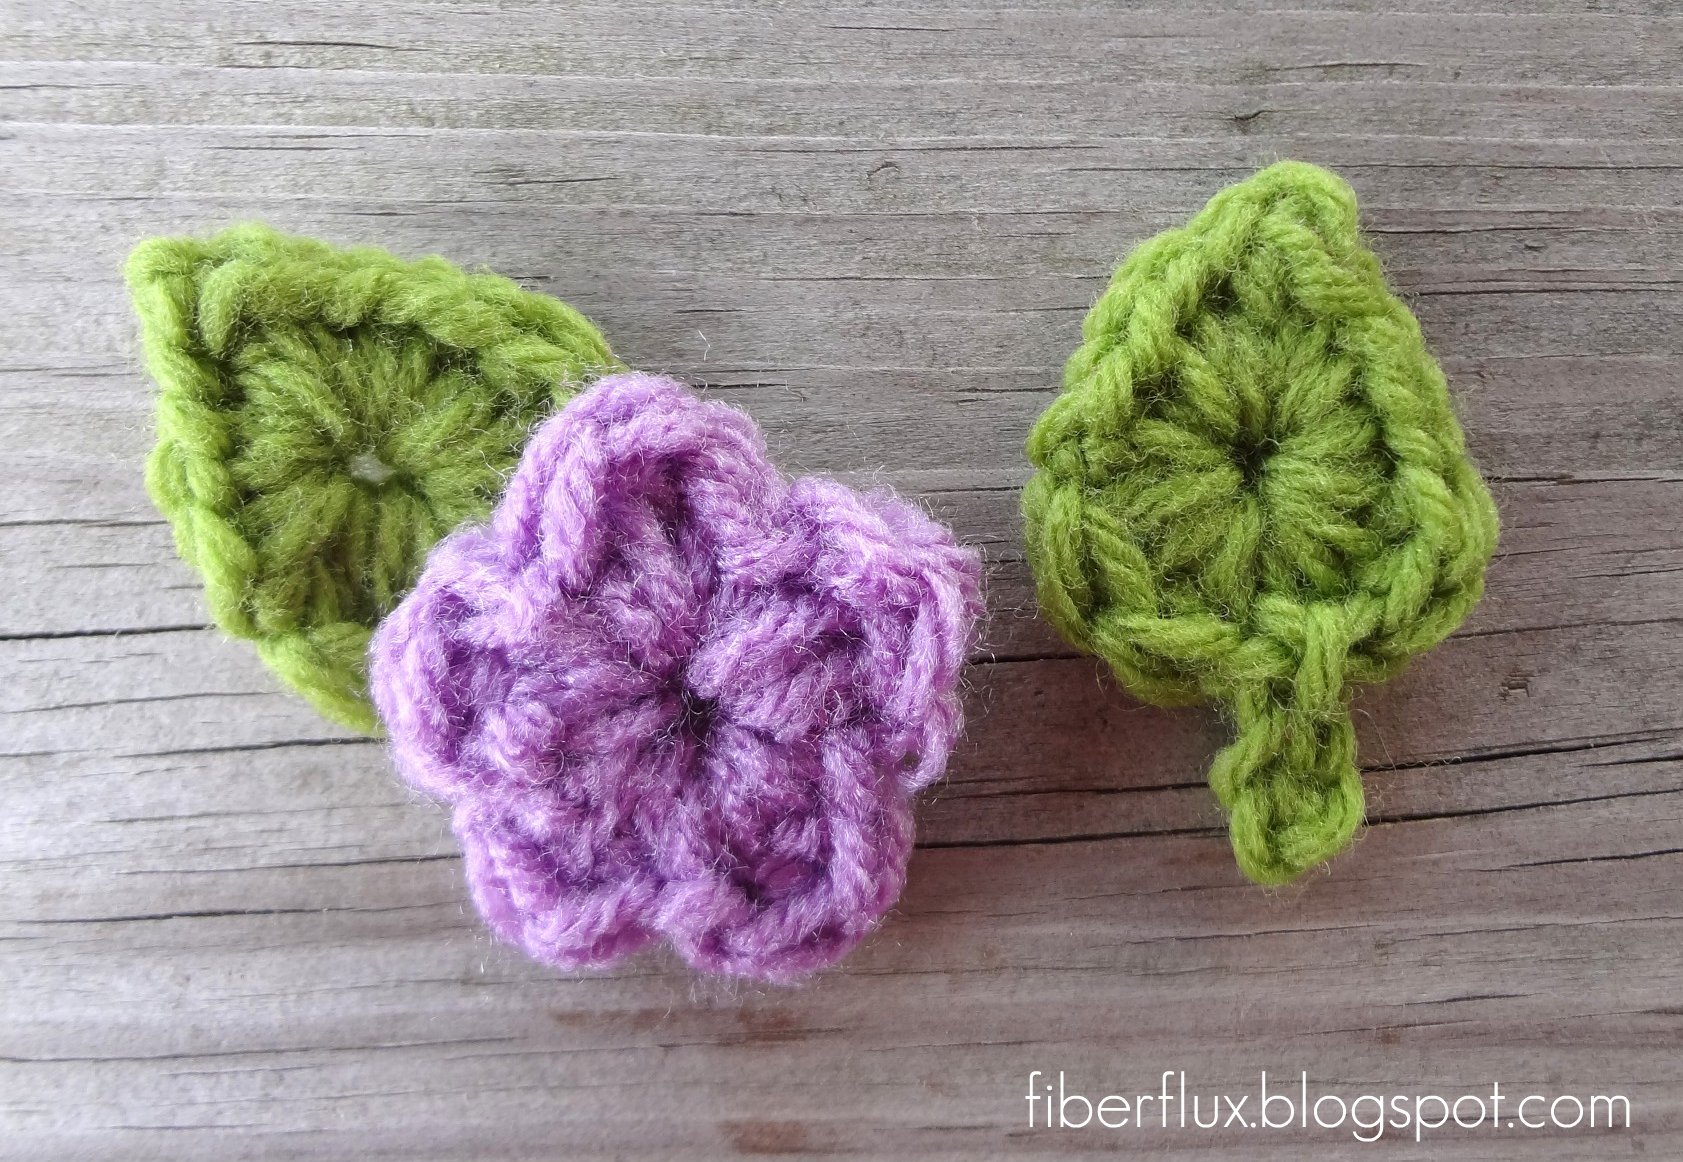 one round crochet leaf with stem